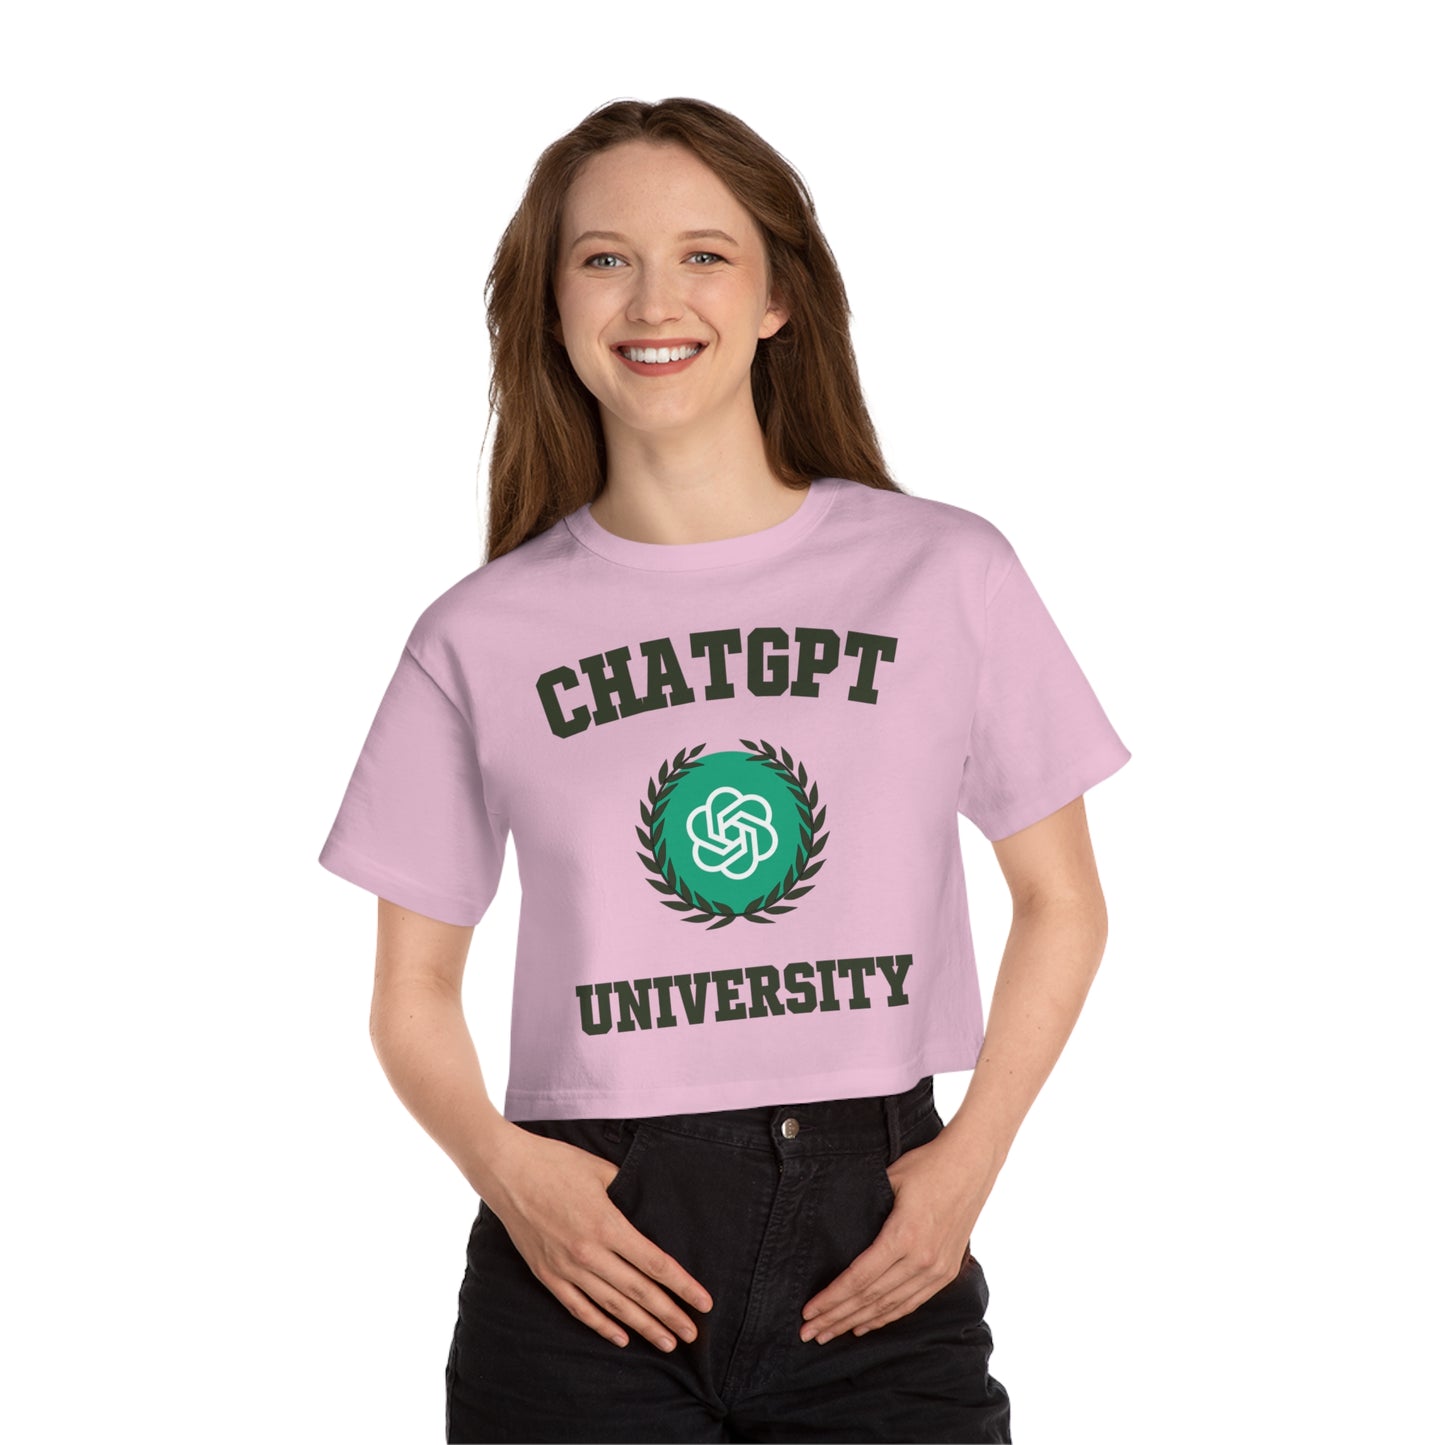 "ChatGPT University" - Champion crop top